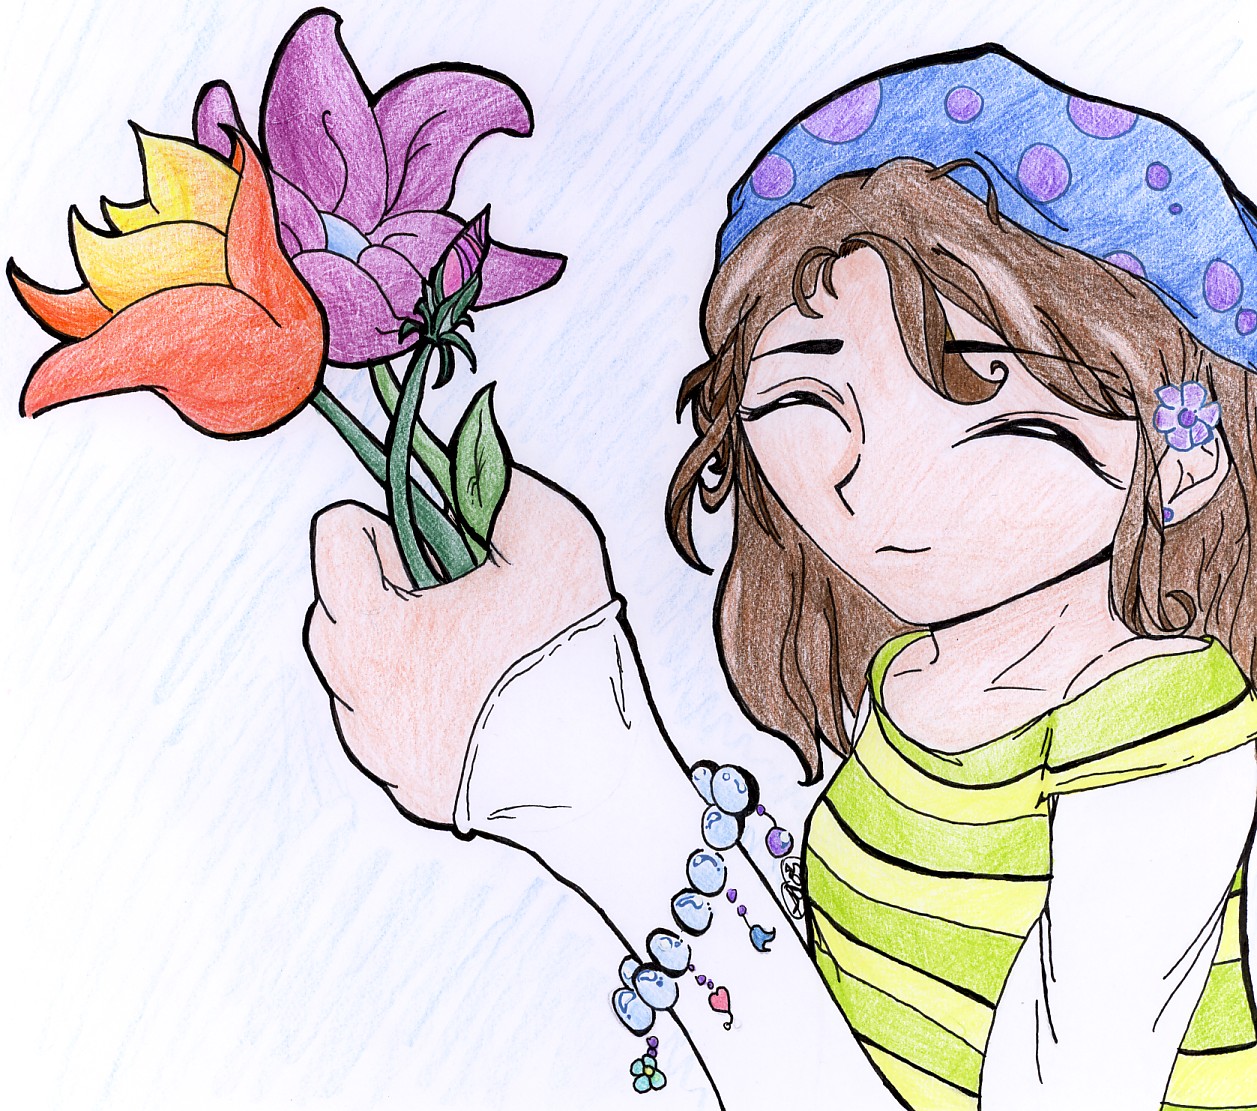 I Love Flowers(request for Popuri_Friend) by Kenshinstrueluv